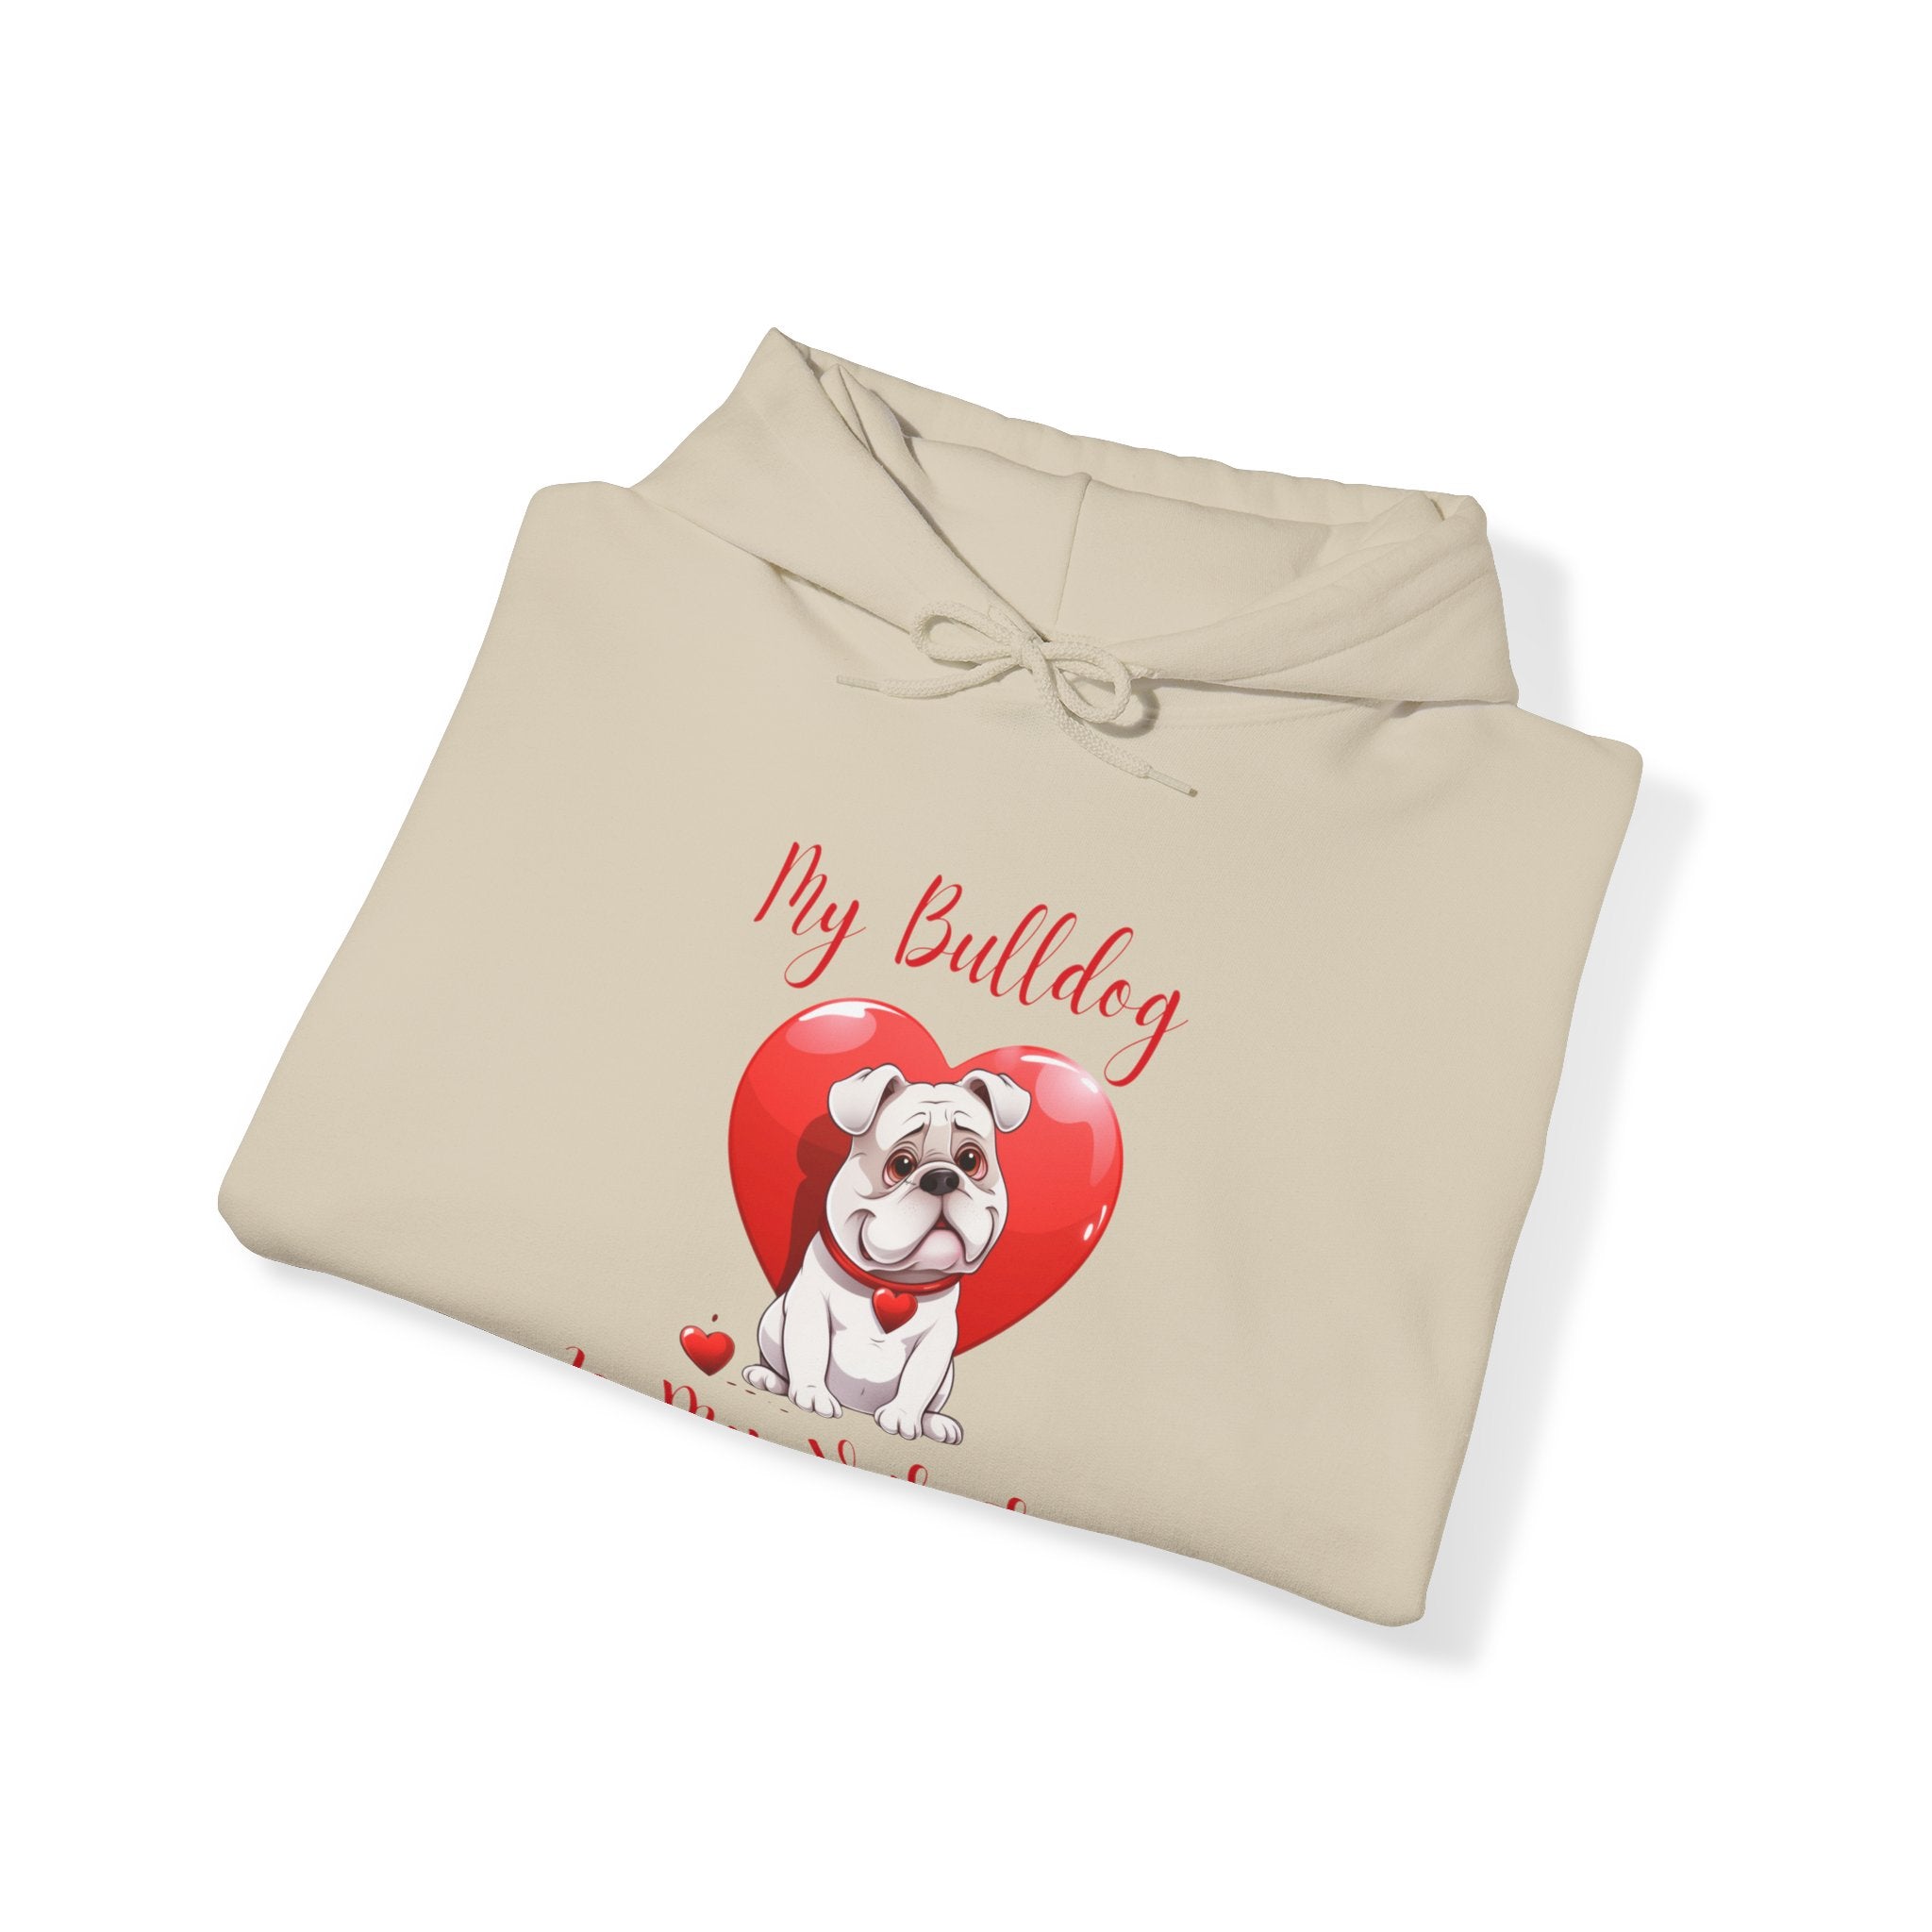 My Bulldog Is My Valentine" - Customizable Bulldog Valentine's Day Hoodie from Tipsy Bully (English/White)